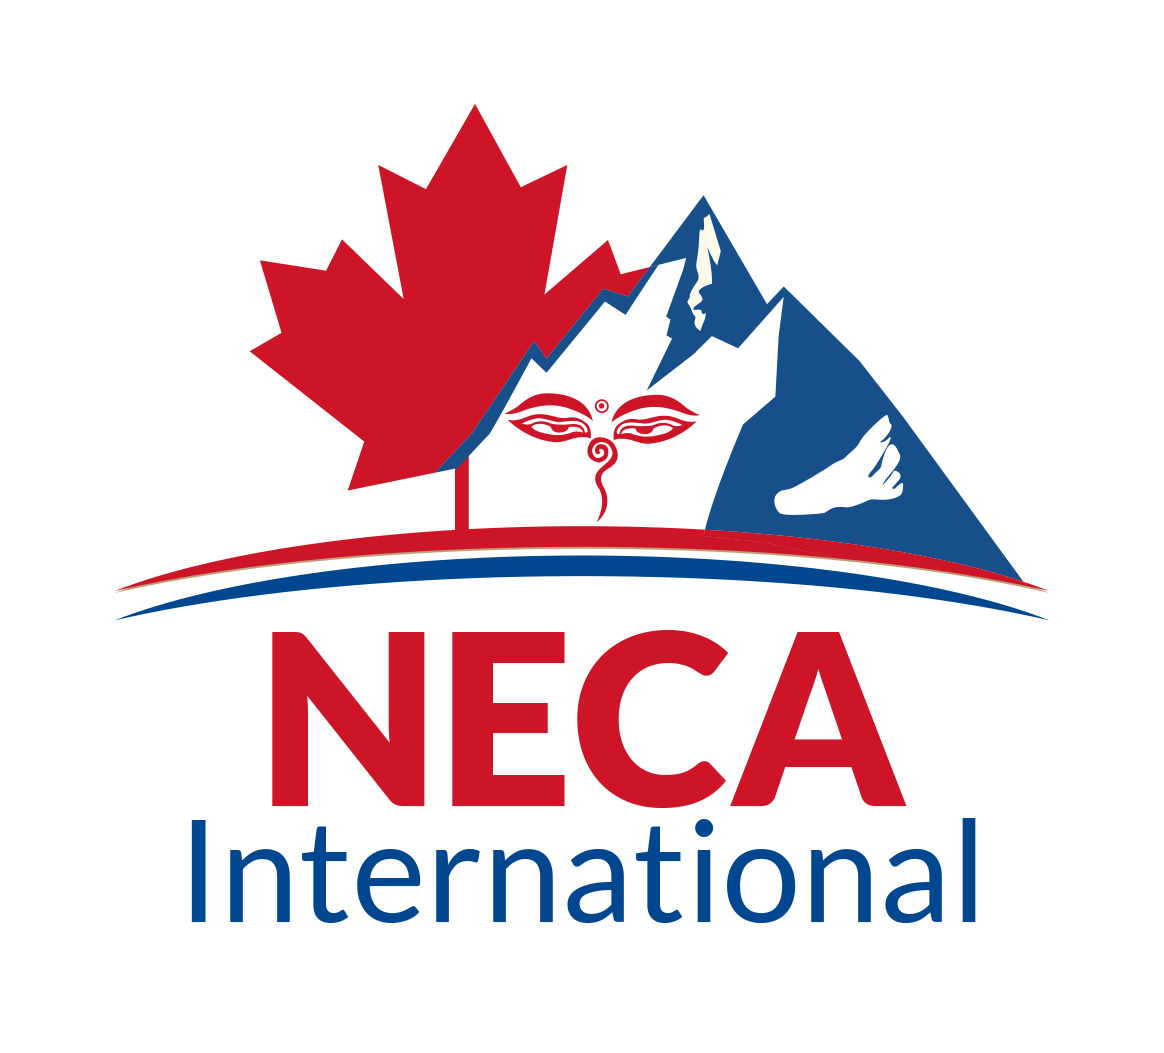 Neca International